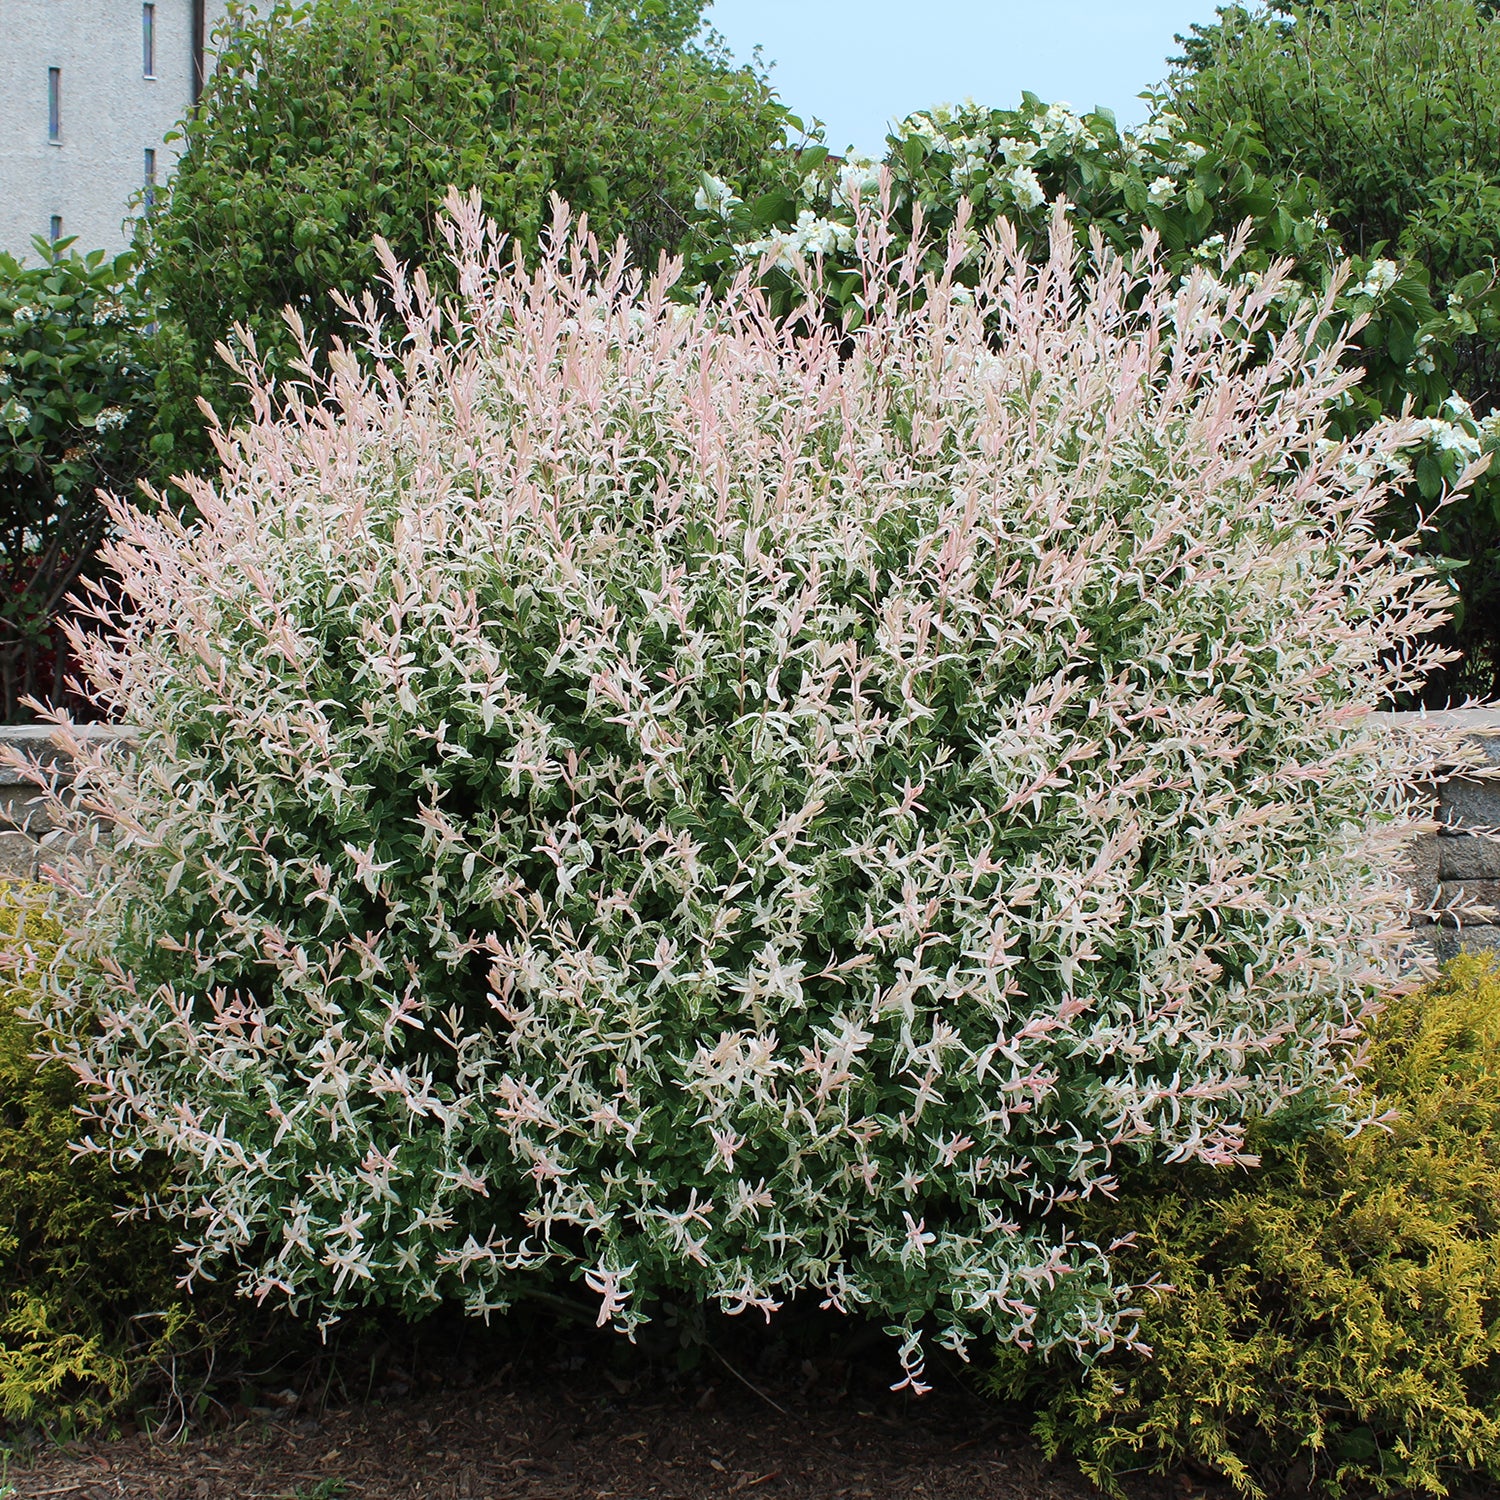 Image of Dappled willow shrub in flower